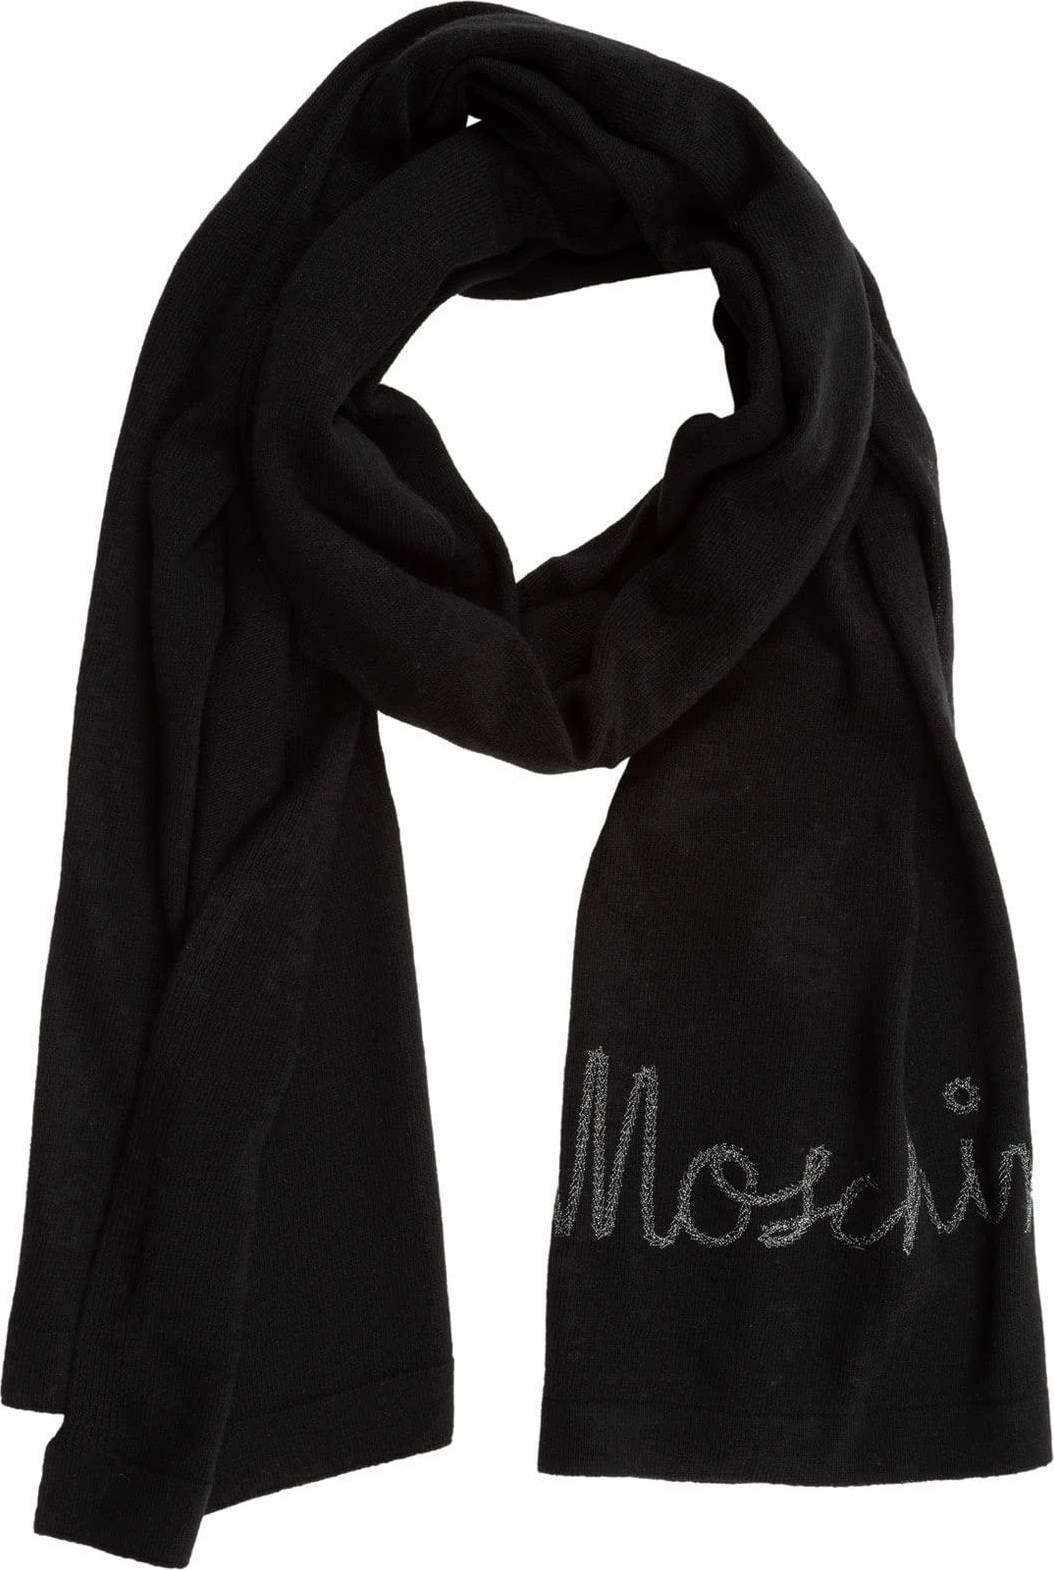 Moschino scarf women 30717m2567016 black wool shawl stole foulard ...